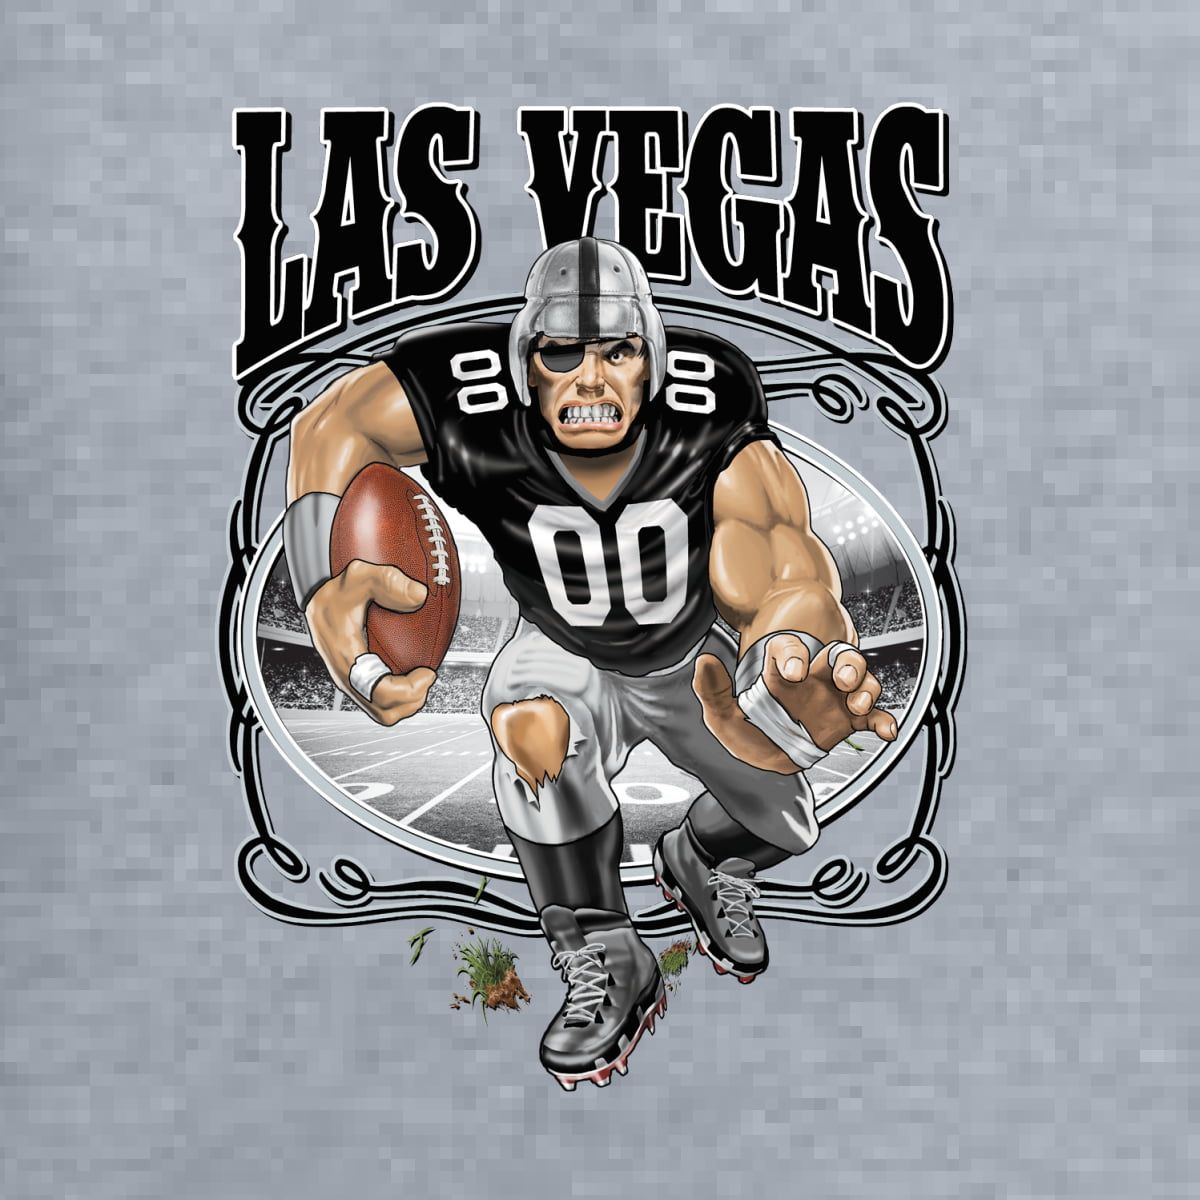 Wild Bobby Las Vegas Fan LV Fantasy Sports Men Long Sleeve Shirt, Heather Grey, Large, Men's, Gray